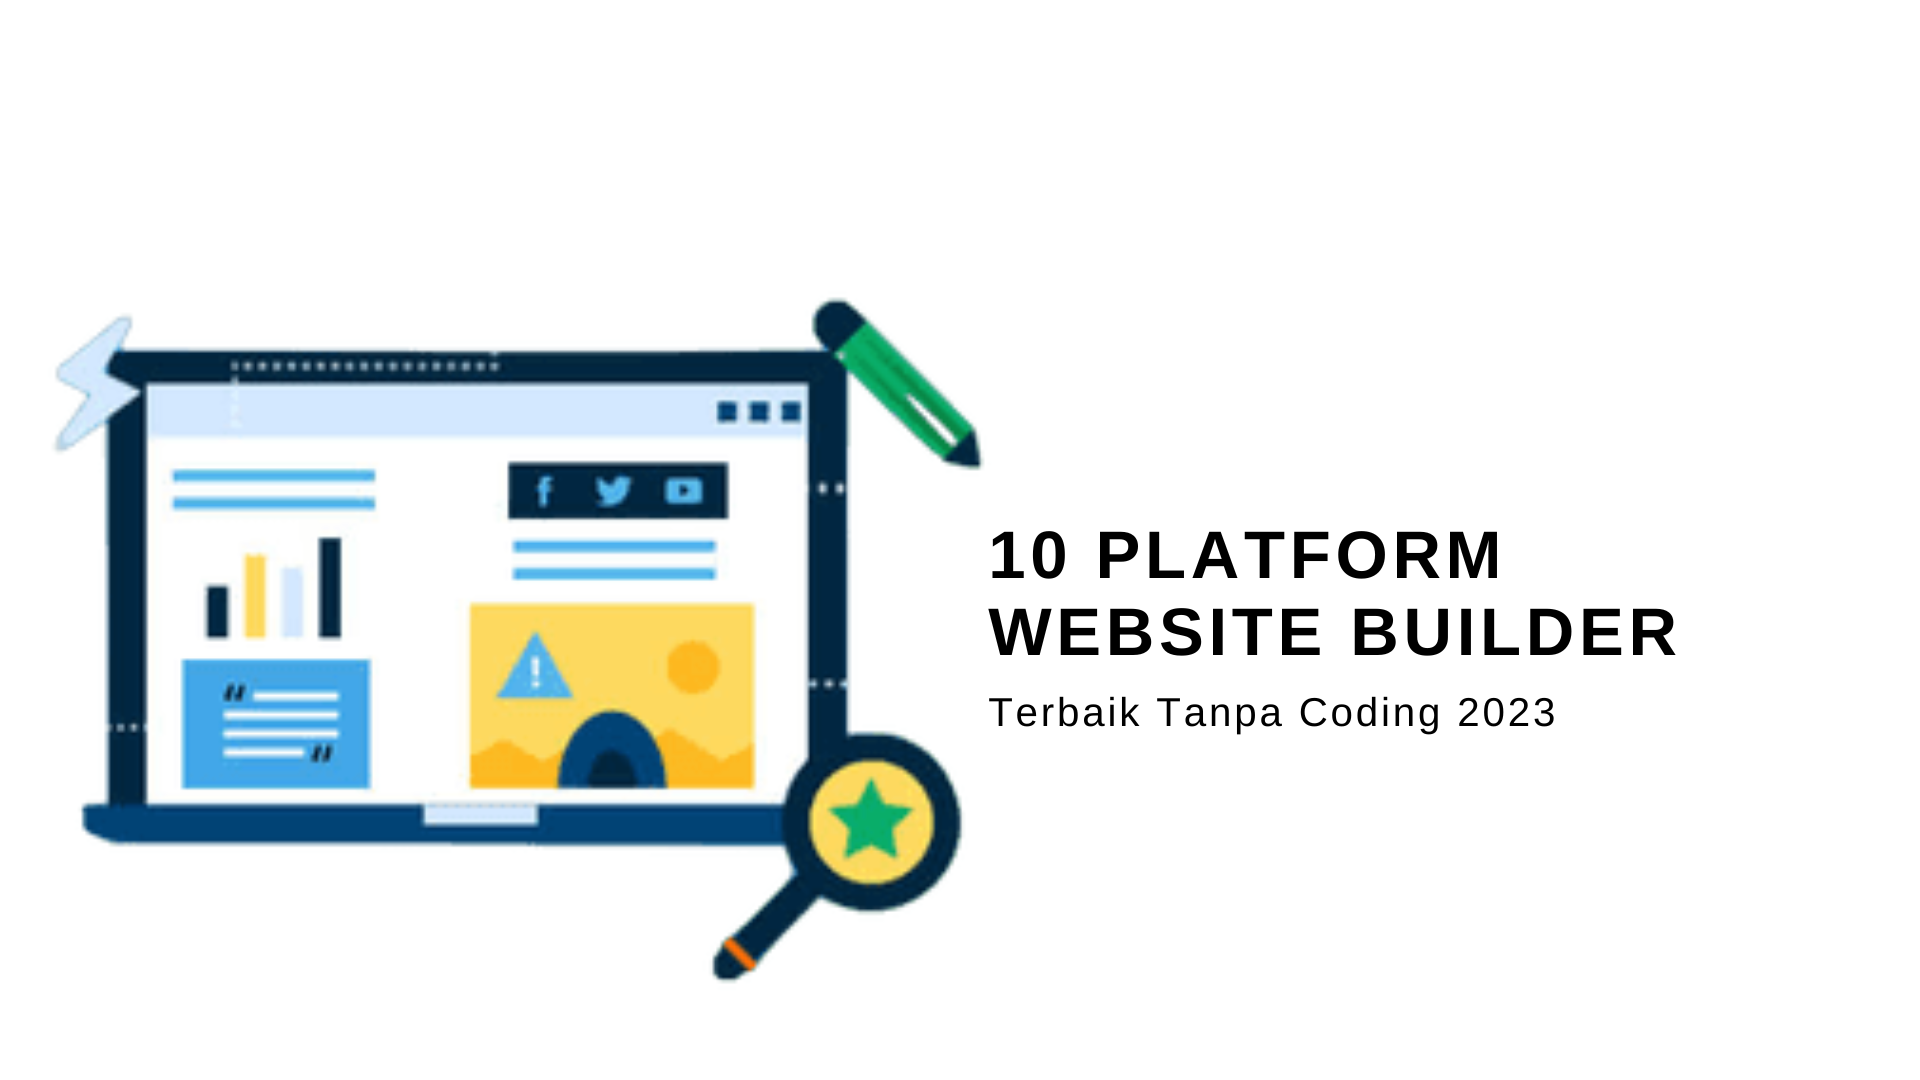 10 Platform Website Builder Terbaik Tanpa Coding 2023